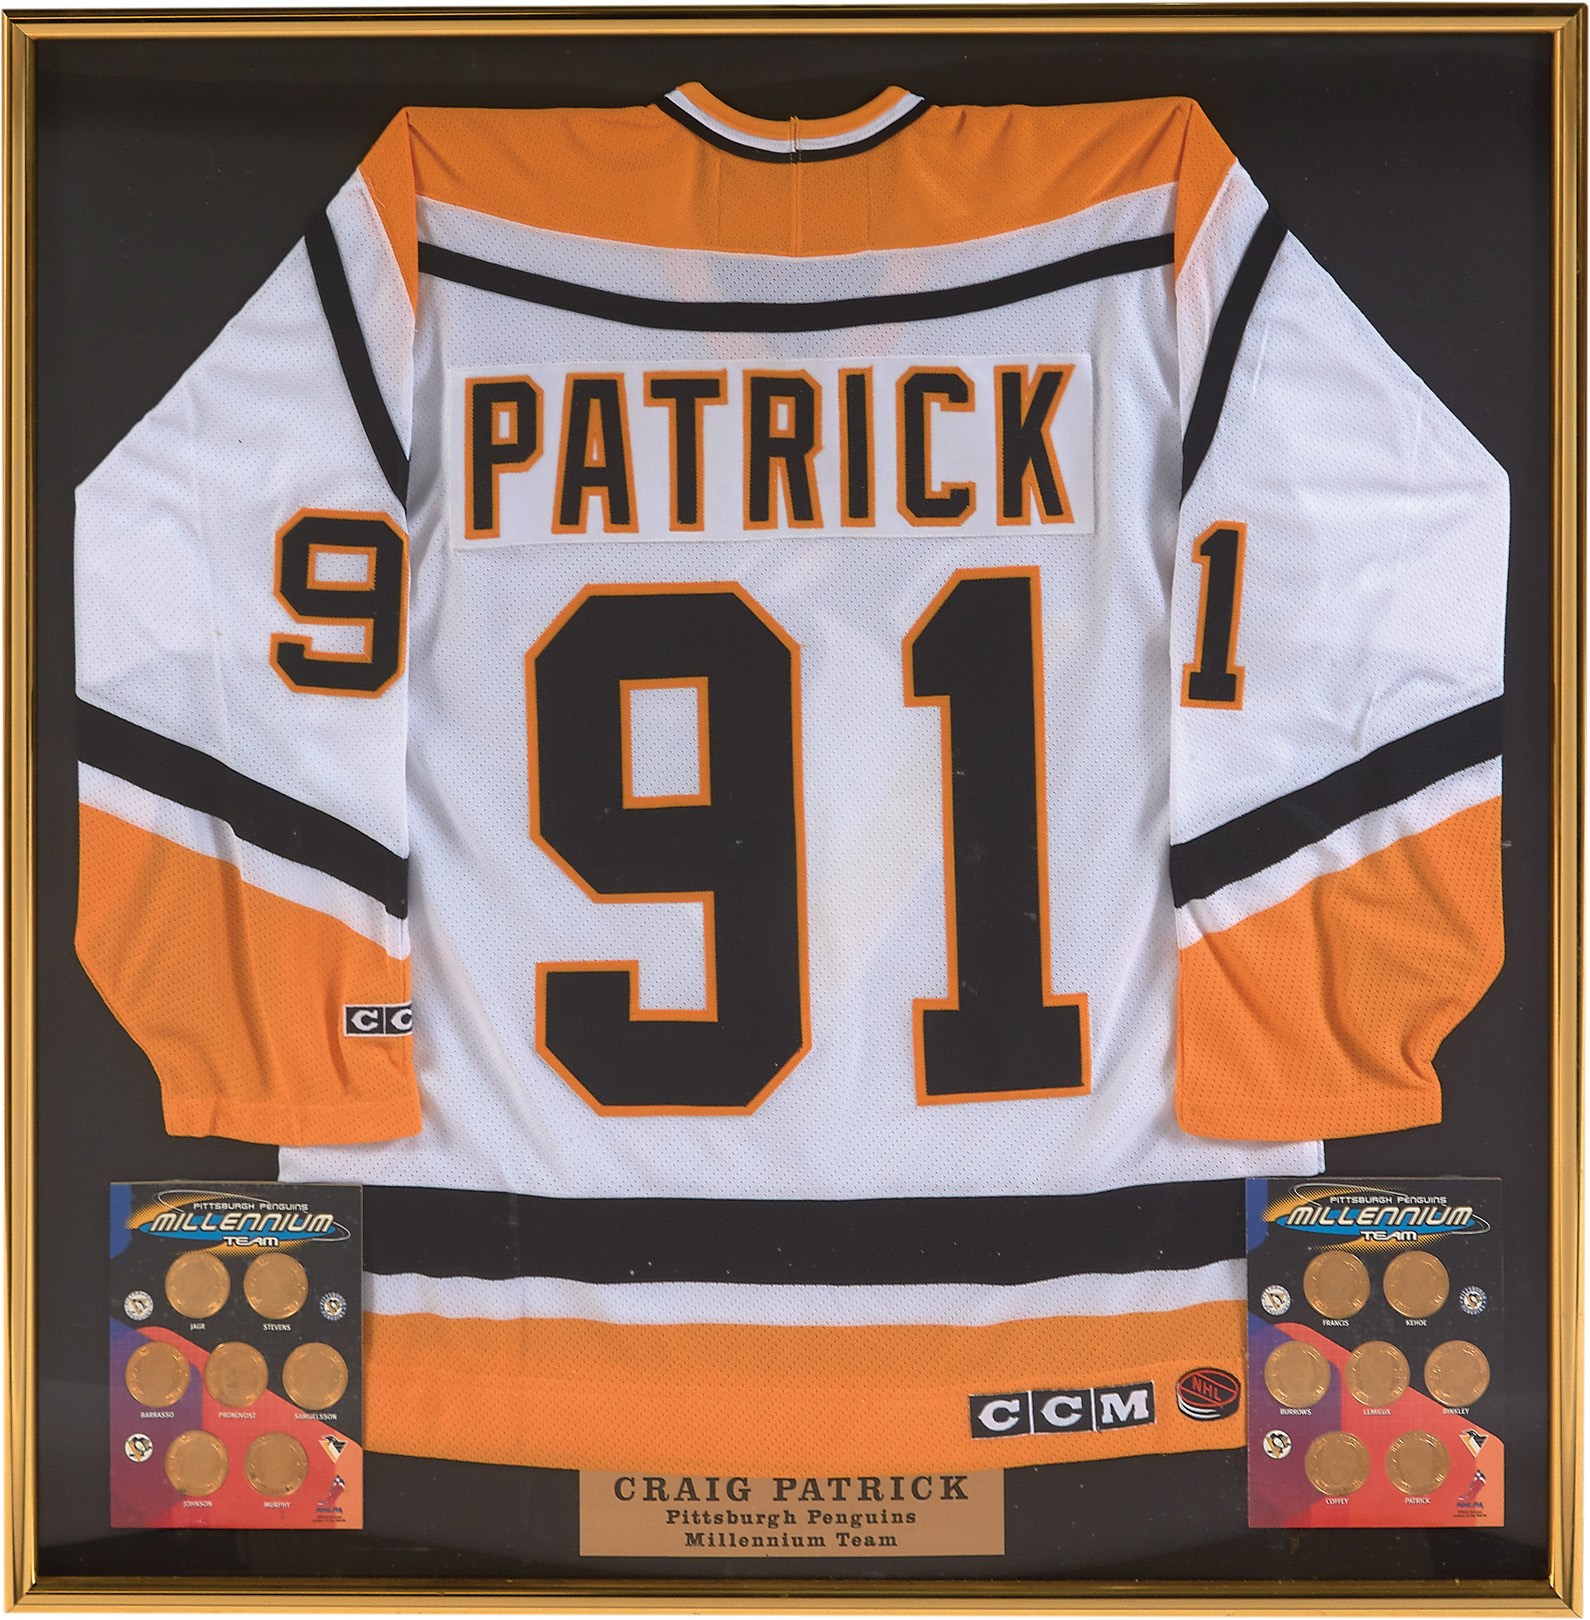 Pittsburgh Penguins Millenium Team Framed Display Presented to Craig Patrick